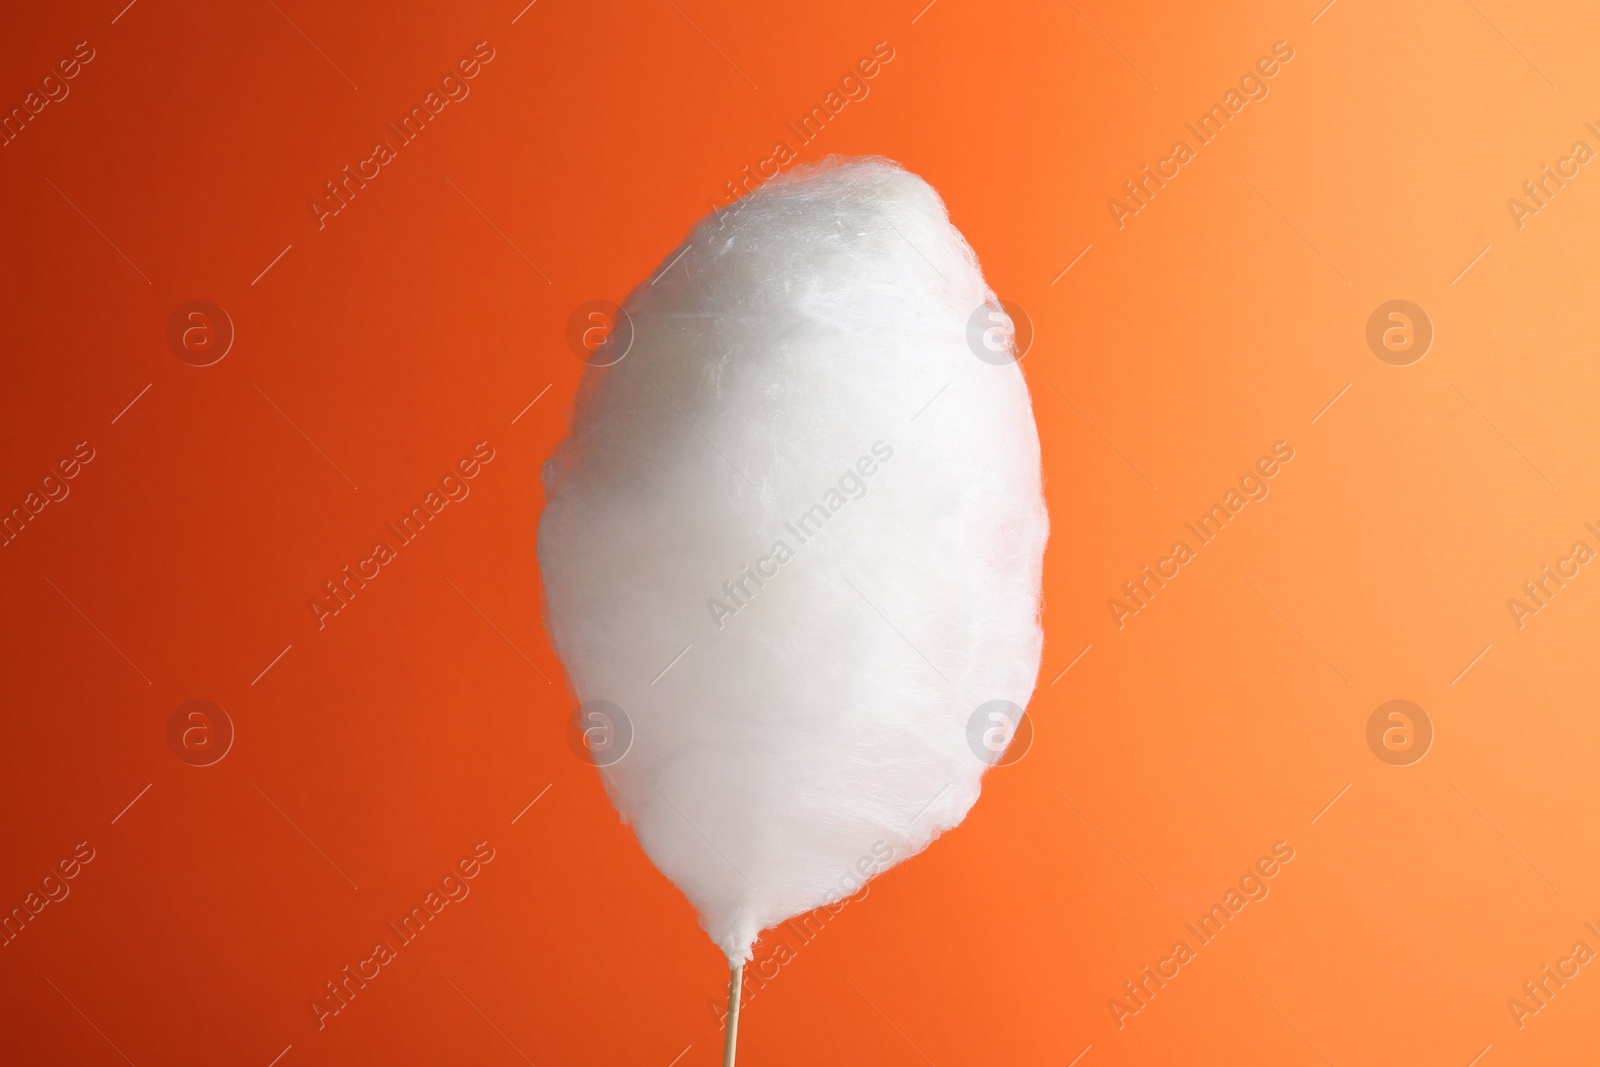 Photo of One sweet cotton candy on orange background